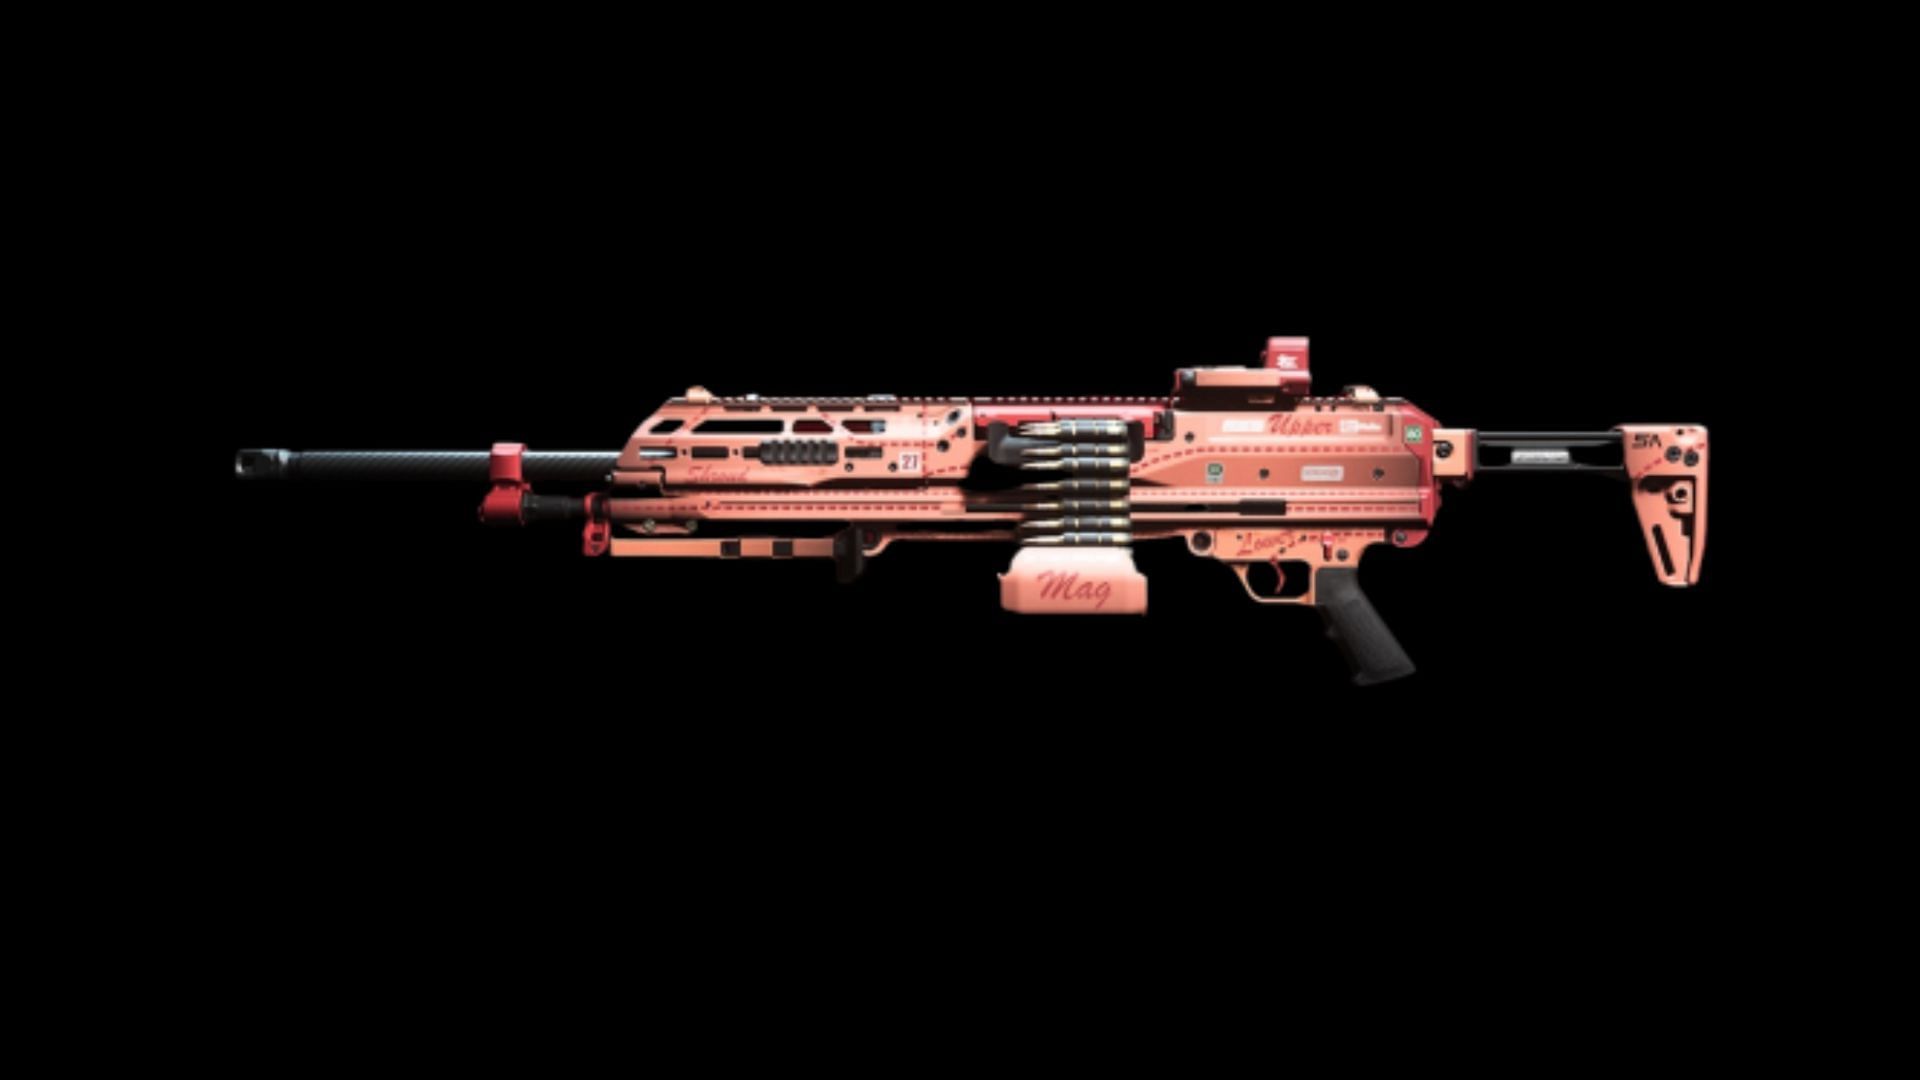 The RAAL MG light machine gun in Warzone 2 (Image via Activision)